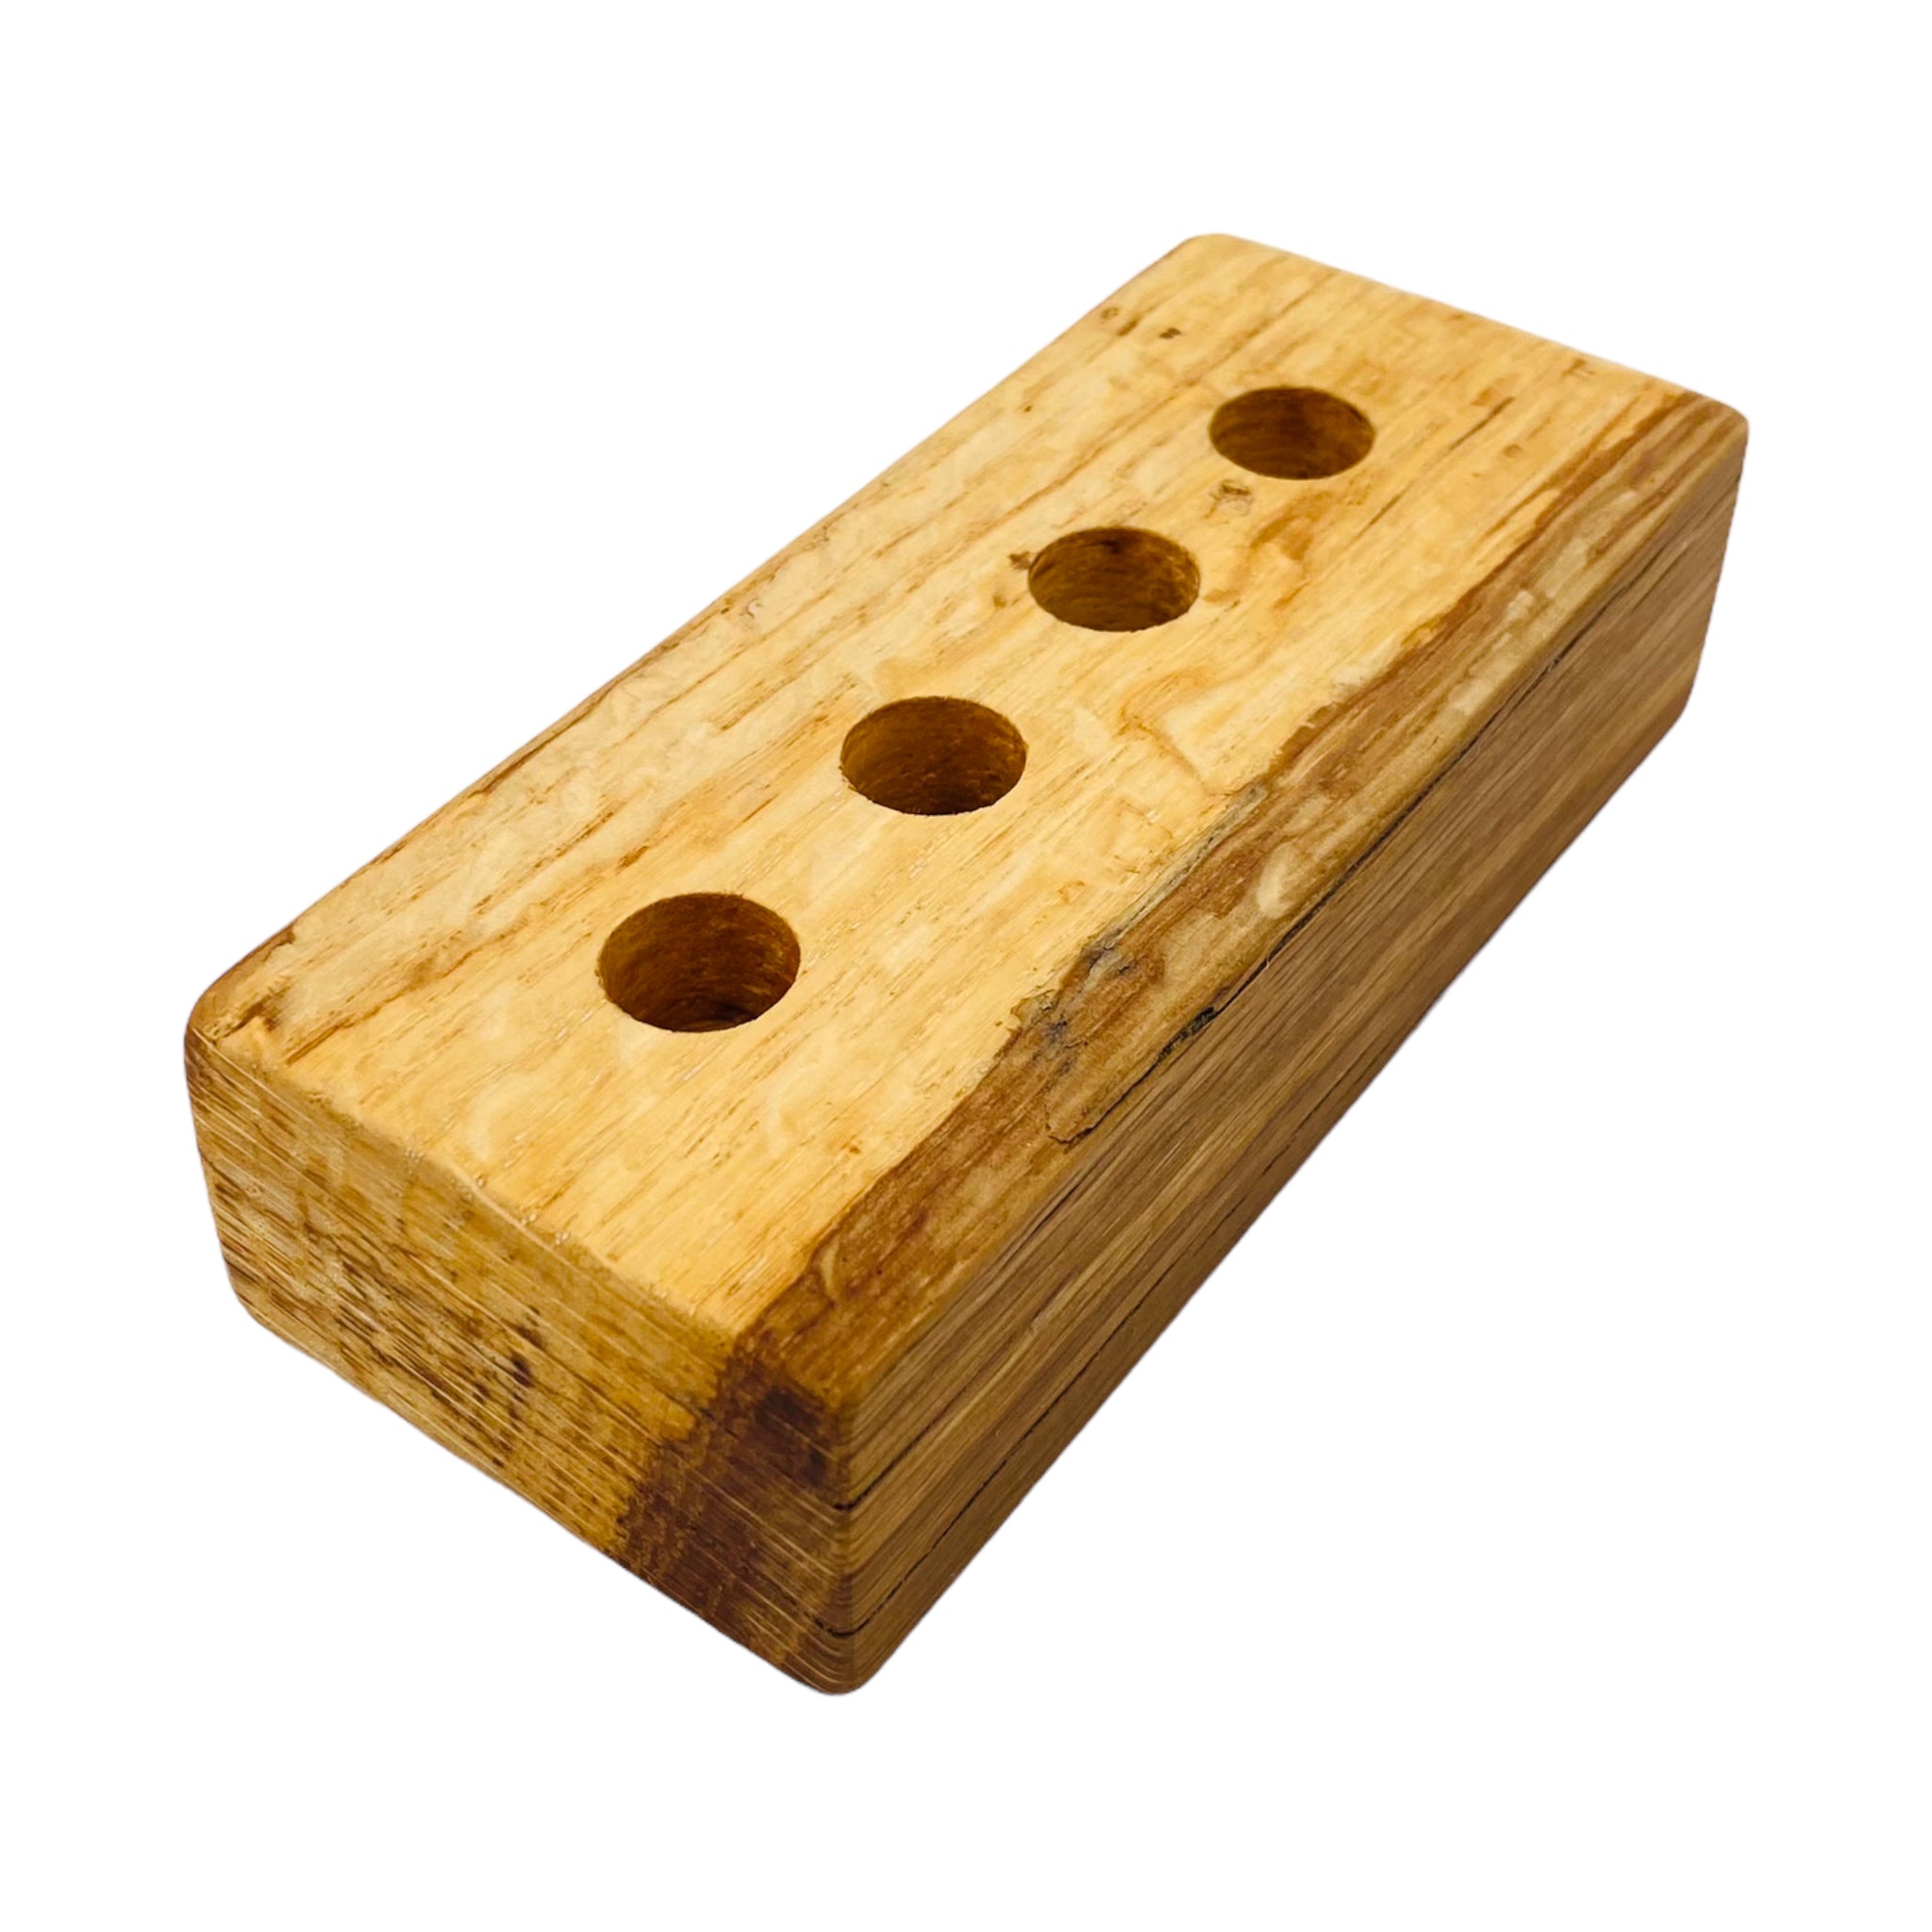 4 Hole Wood Display Stand Holder For 14mm Bong Bowl Pieces Or Quartz Bangers - Cork Oak